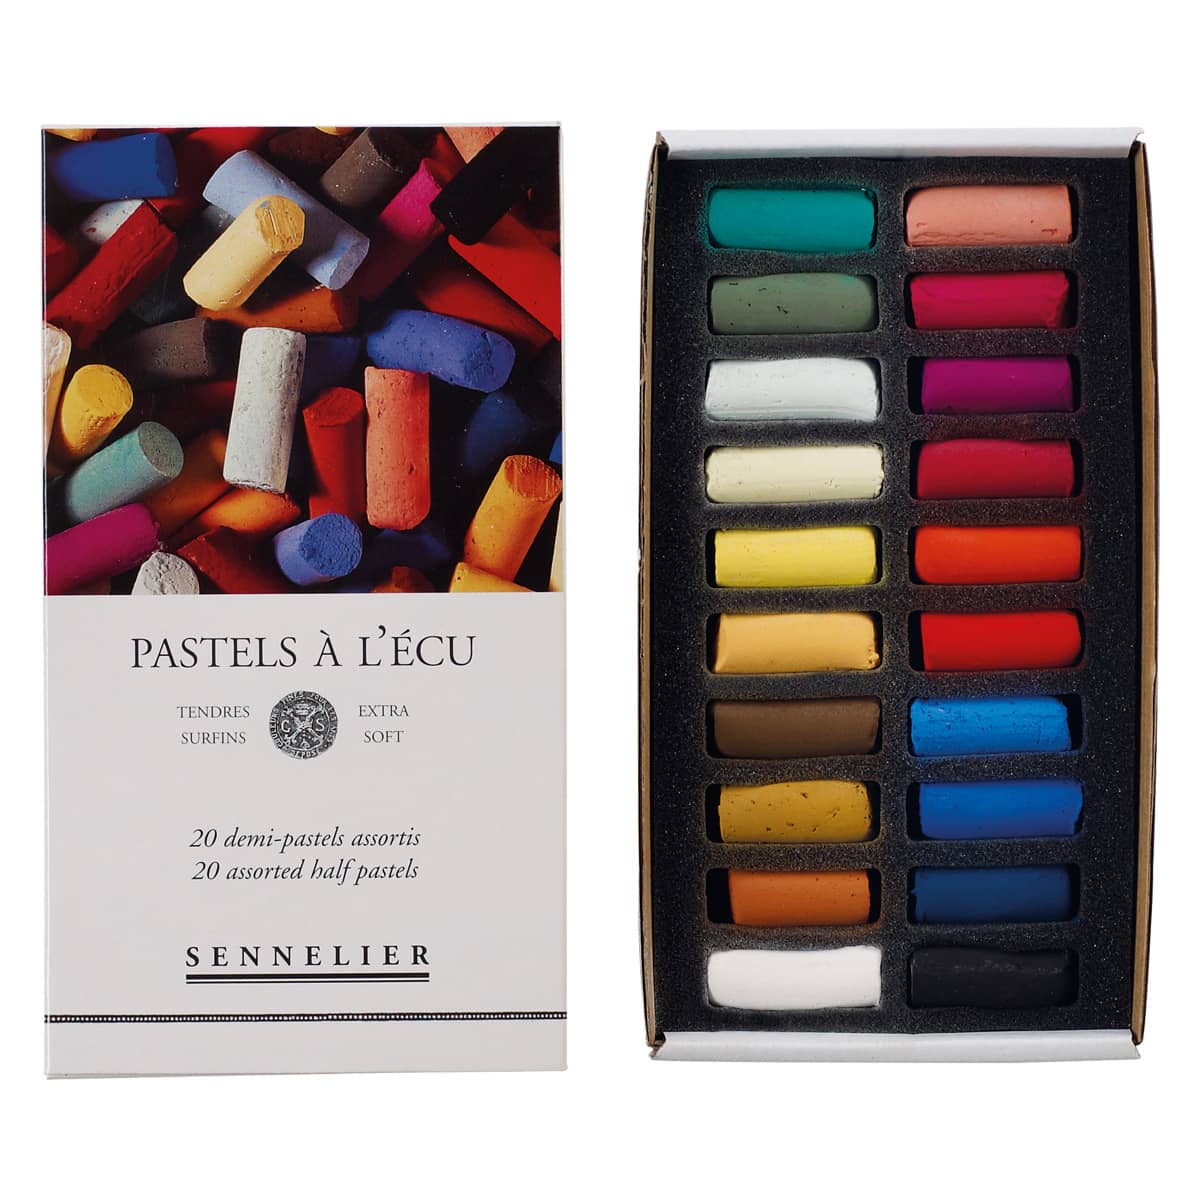 Sennelier Extra Soft Pastel Cardboard Box Set of 20 - Assorted Colors, Half-Sticks